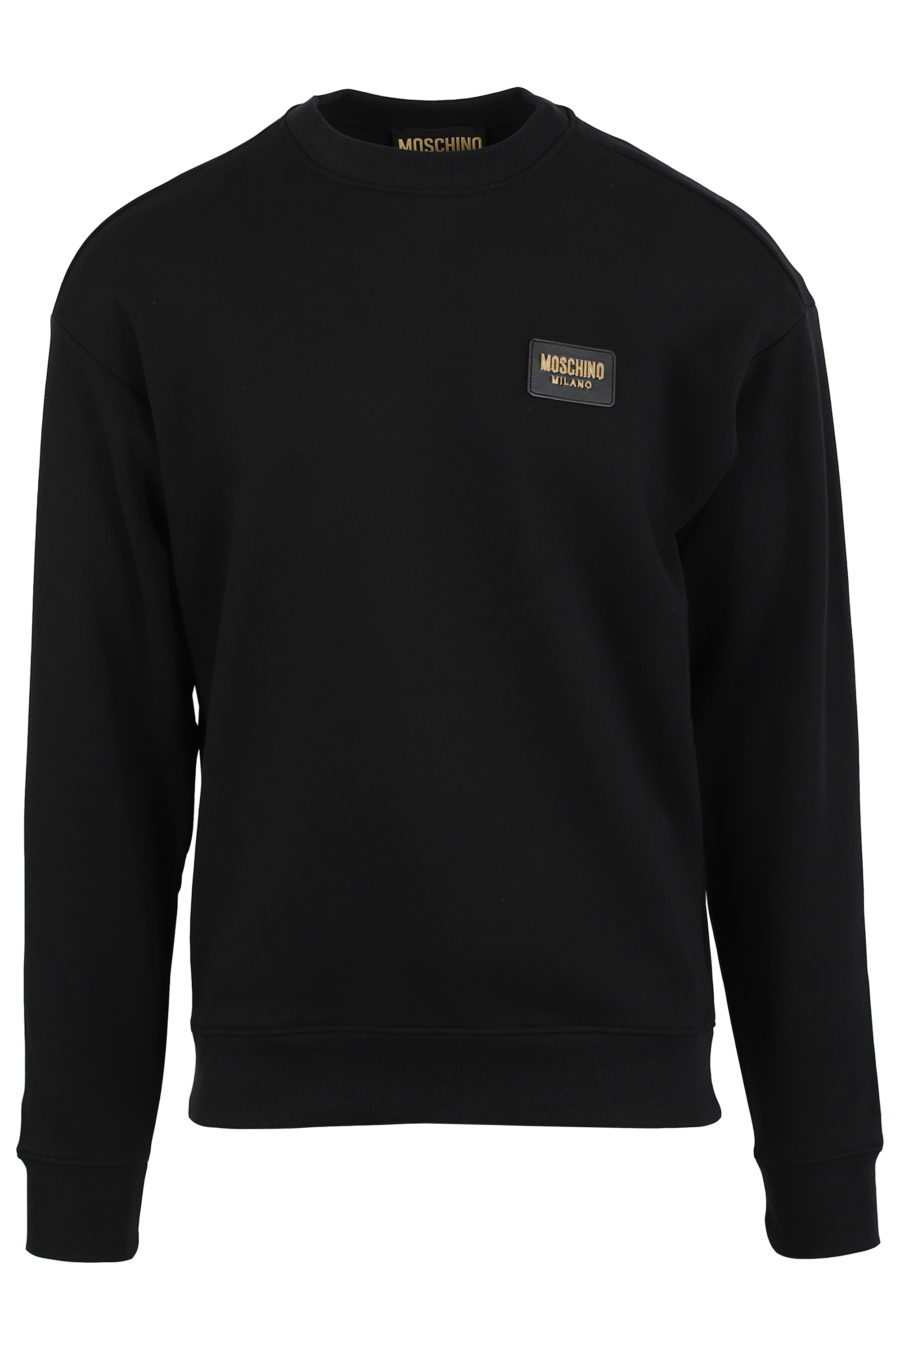 Schwarzes Sweatshirt mit goldenem Logo - IMG 0957